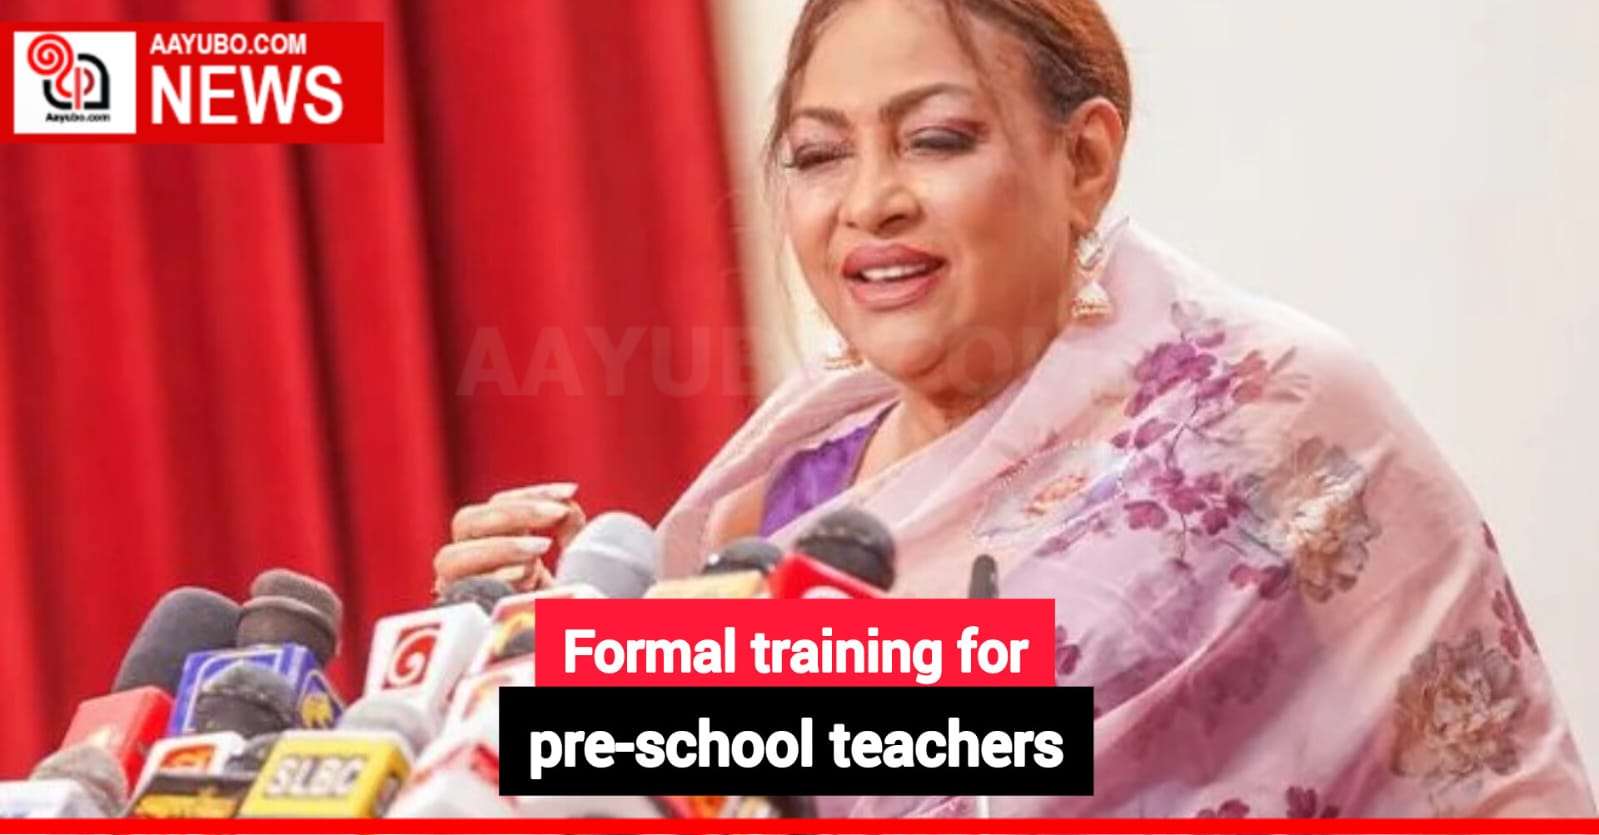 Formal training for pre-school teachers